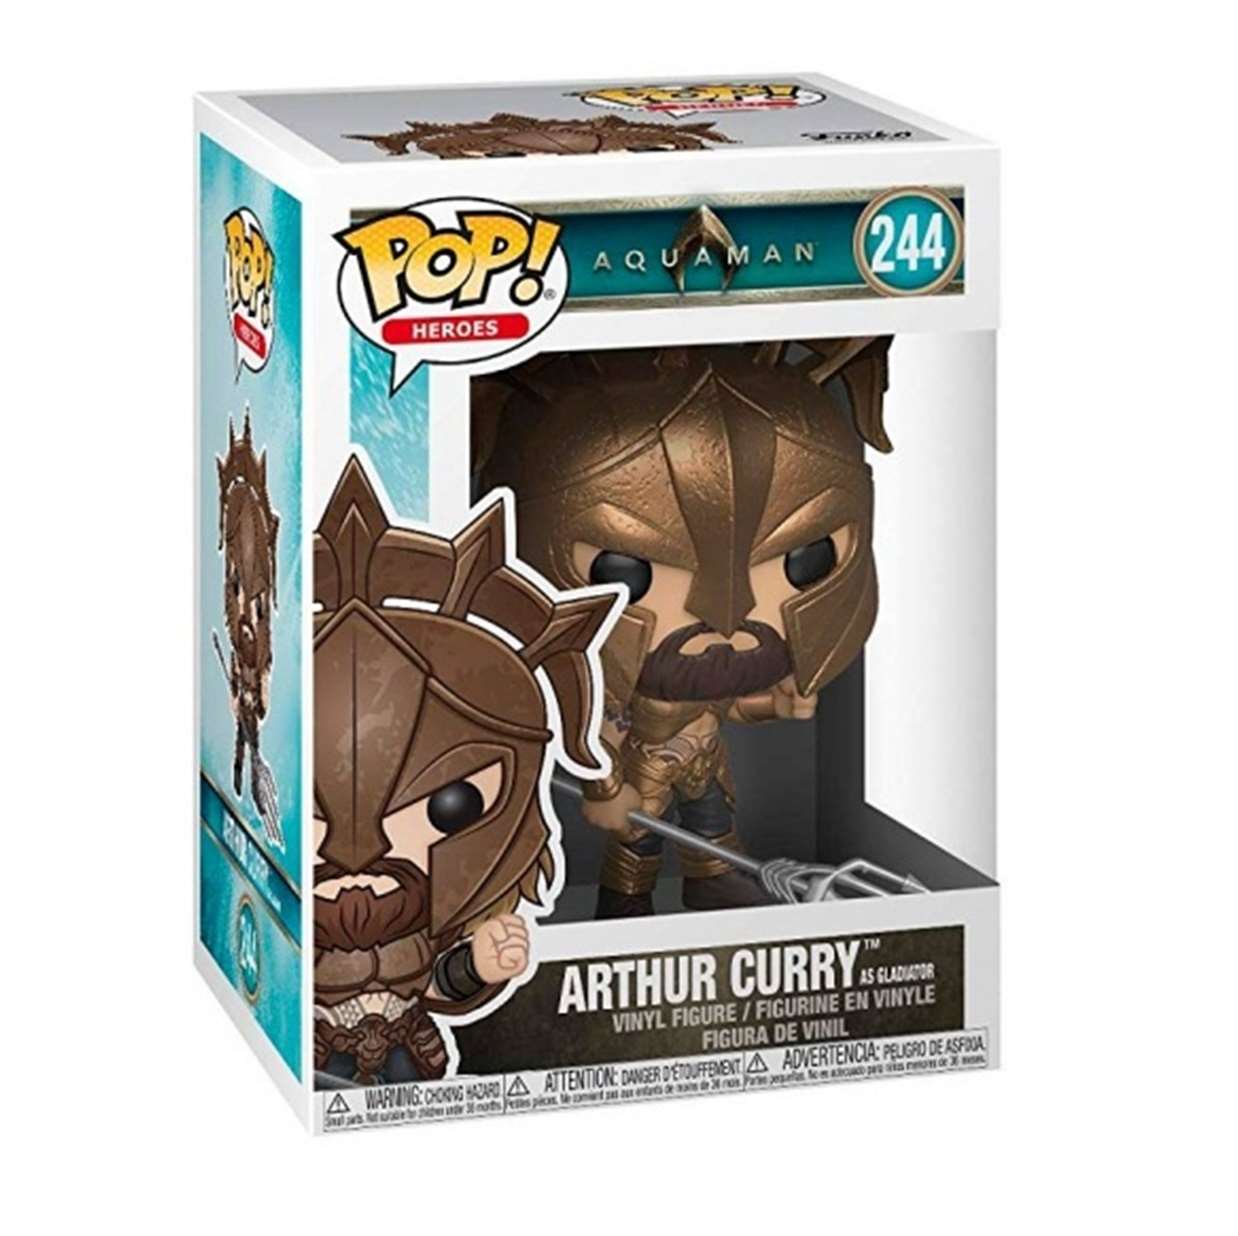 Arthur Curry #244 Funko Pop! Heroes Aquaman